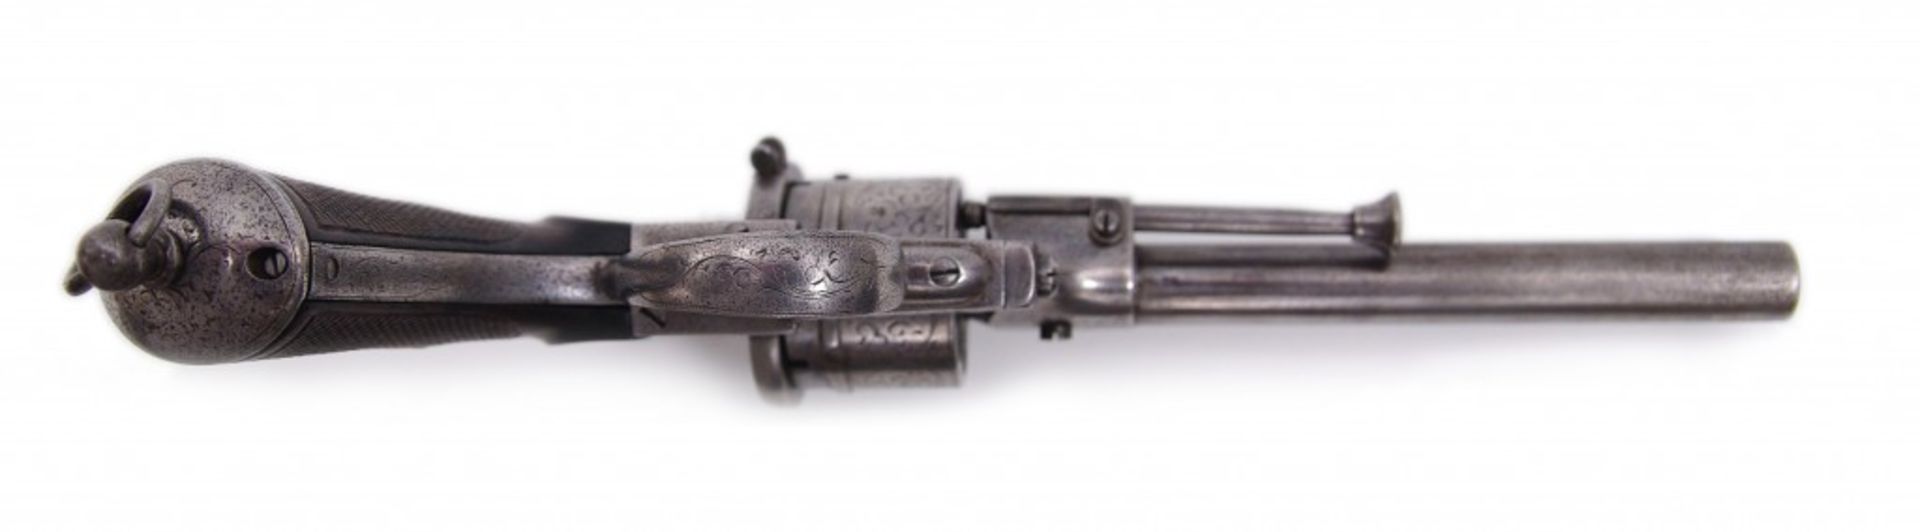 A Pinfire Revolver - Image 4 of 5